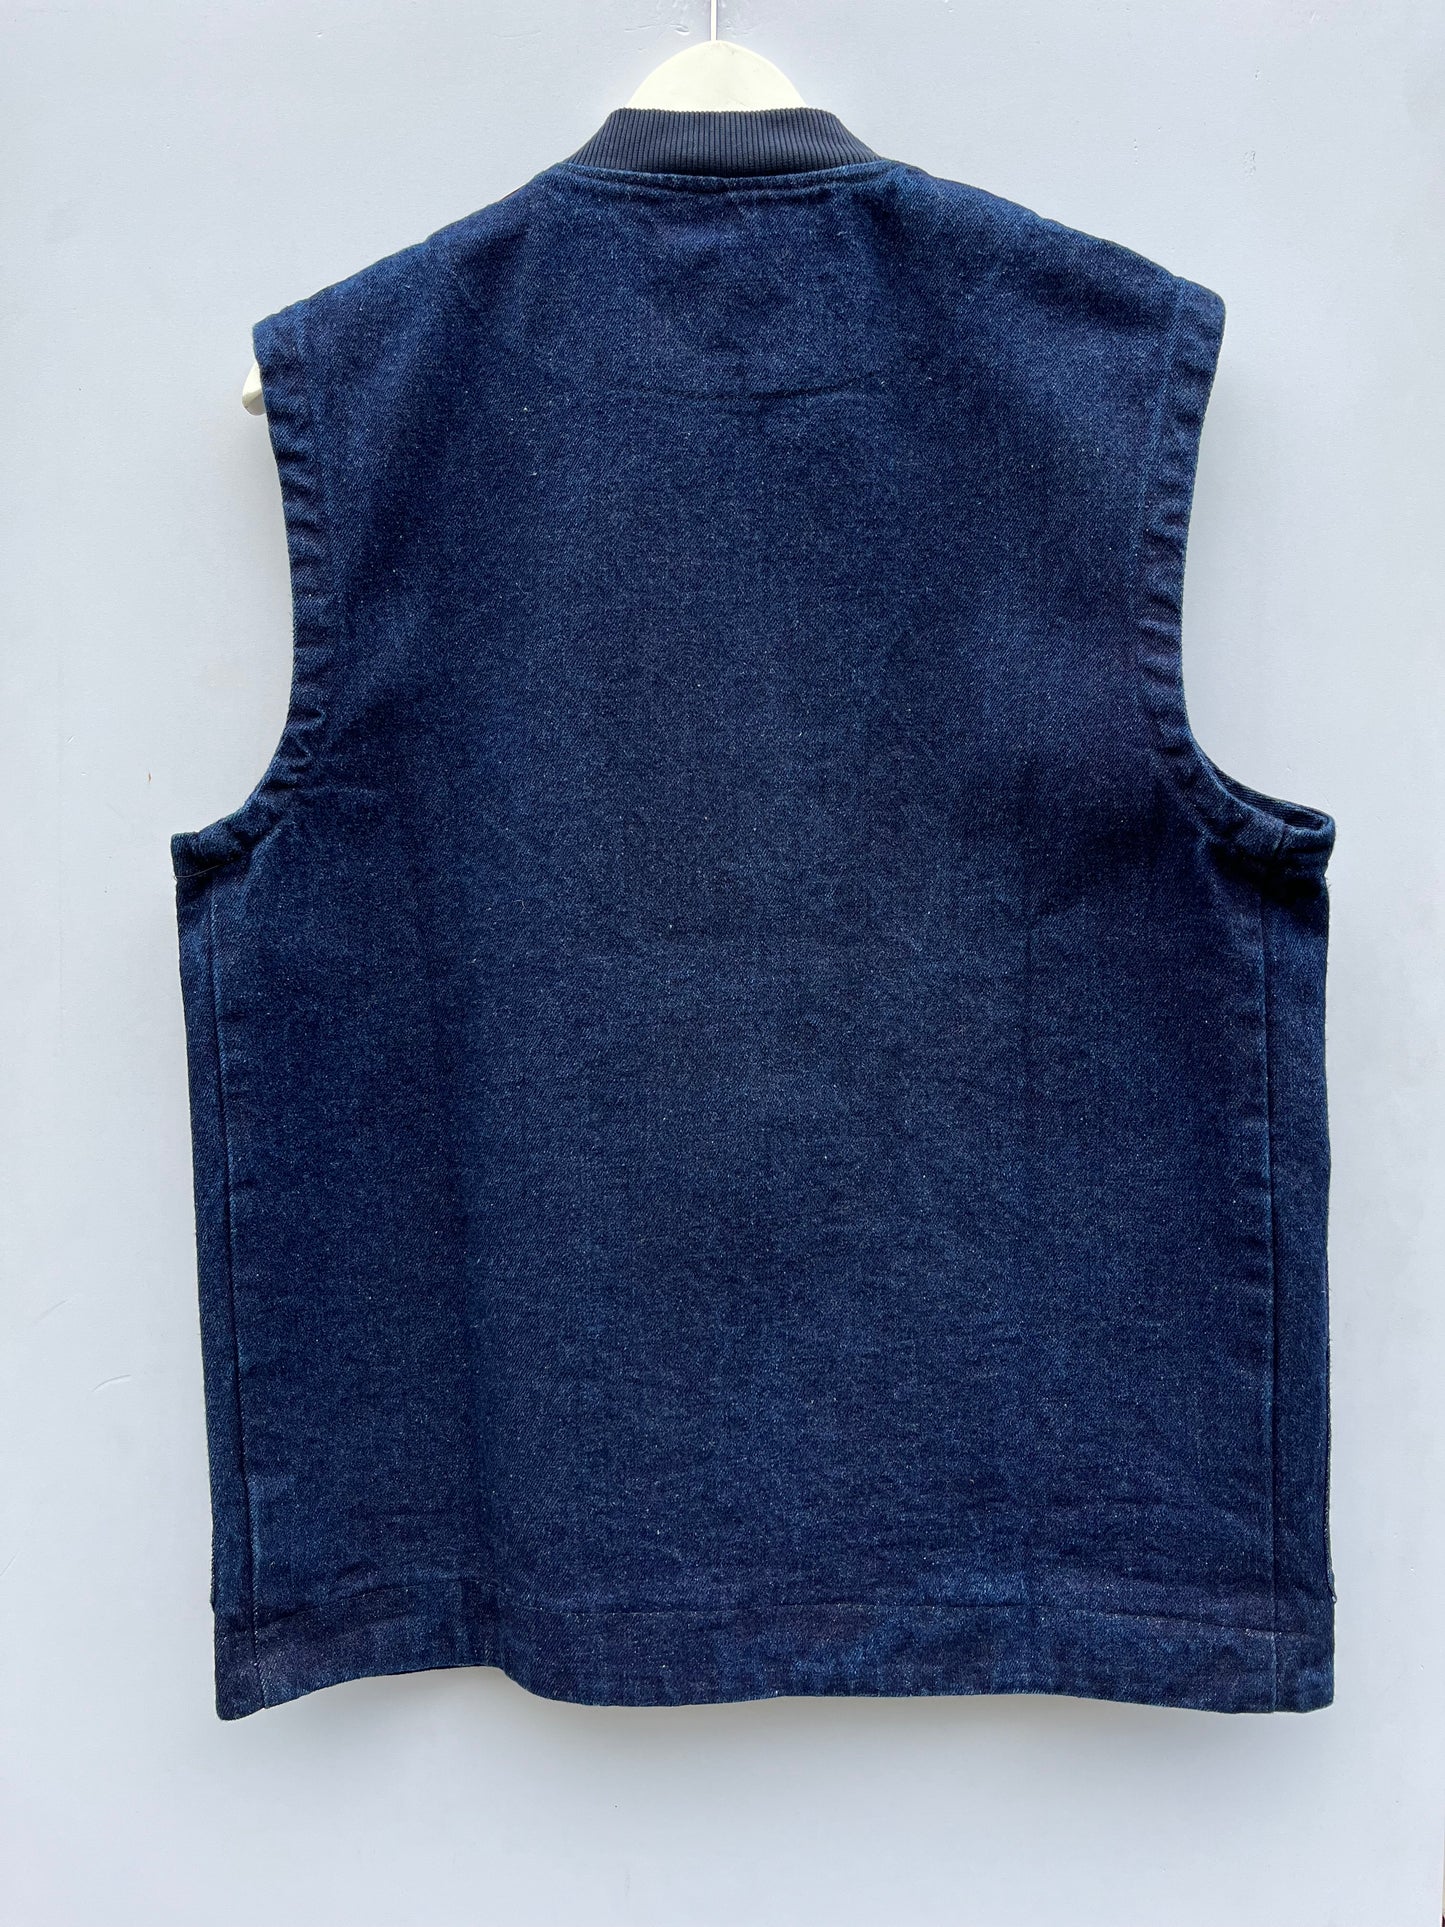 Gilet in tessuto denim colore jeans by Seadog 1990